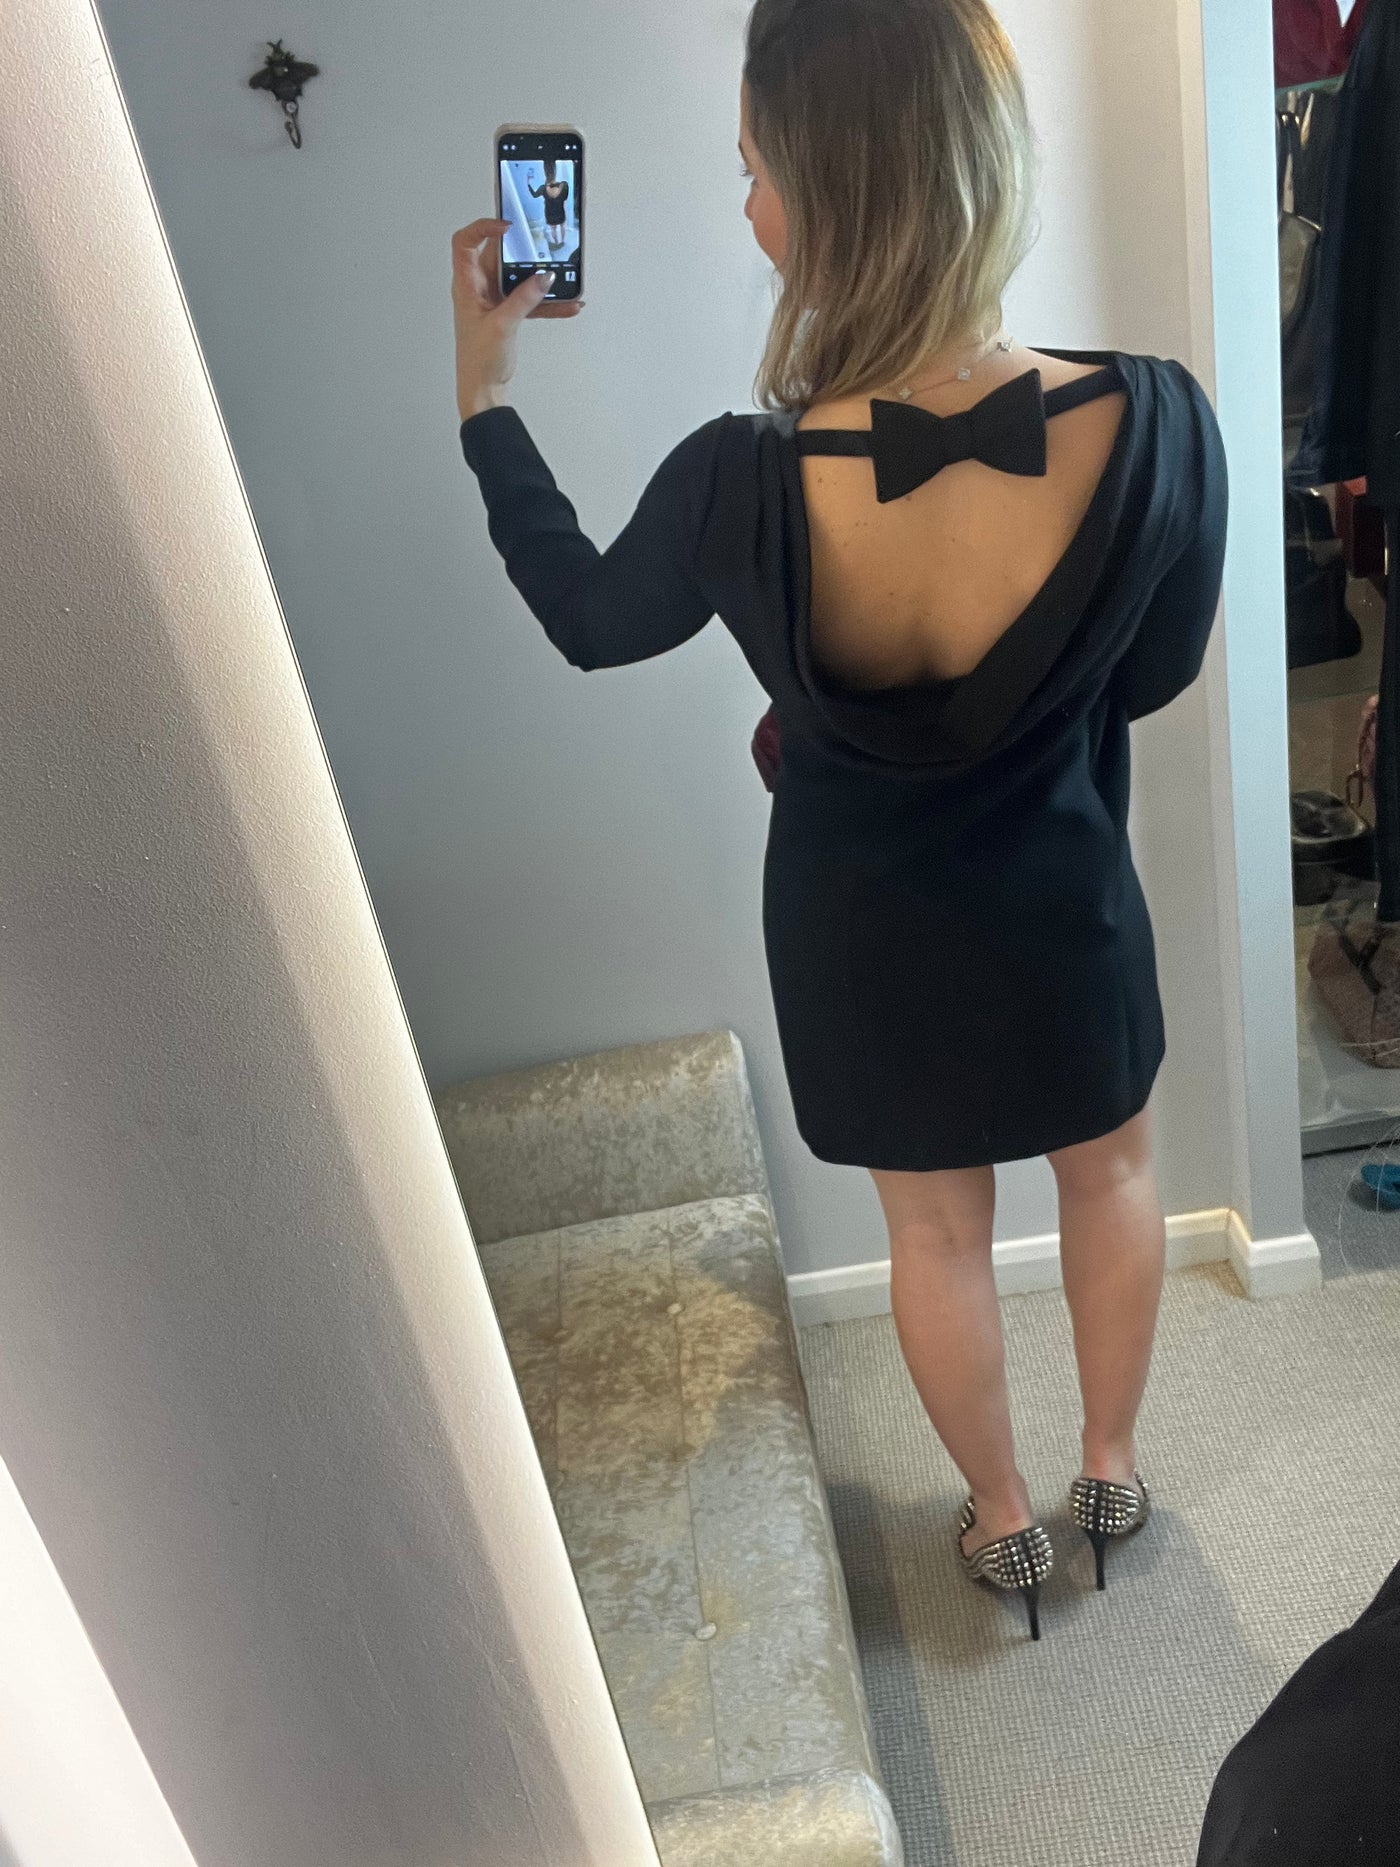 Valentino little black dress size 6-10